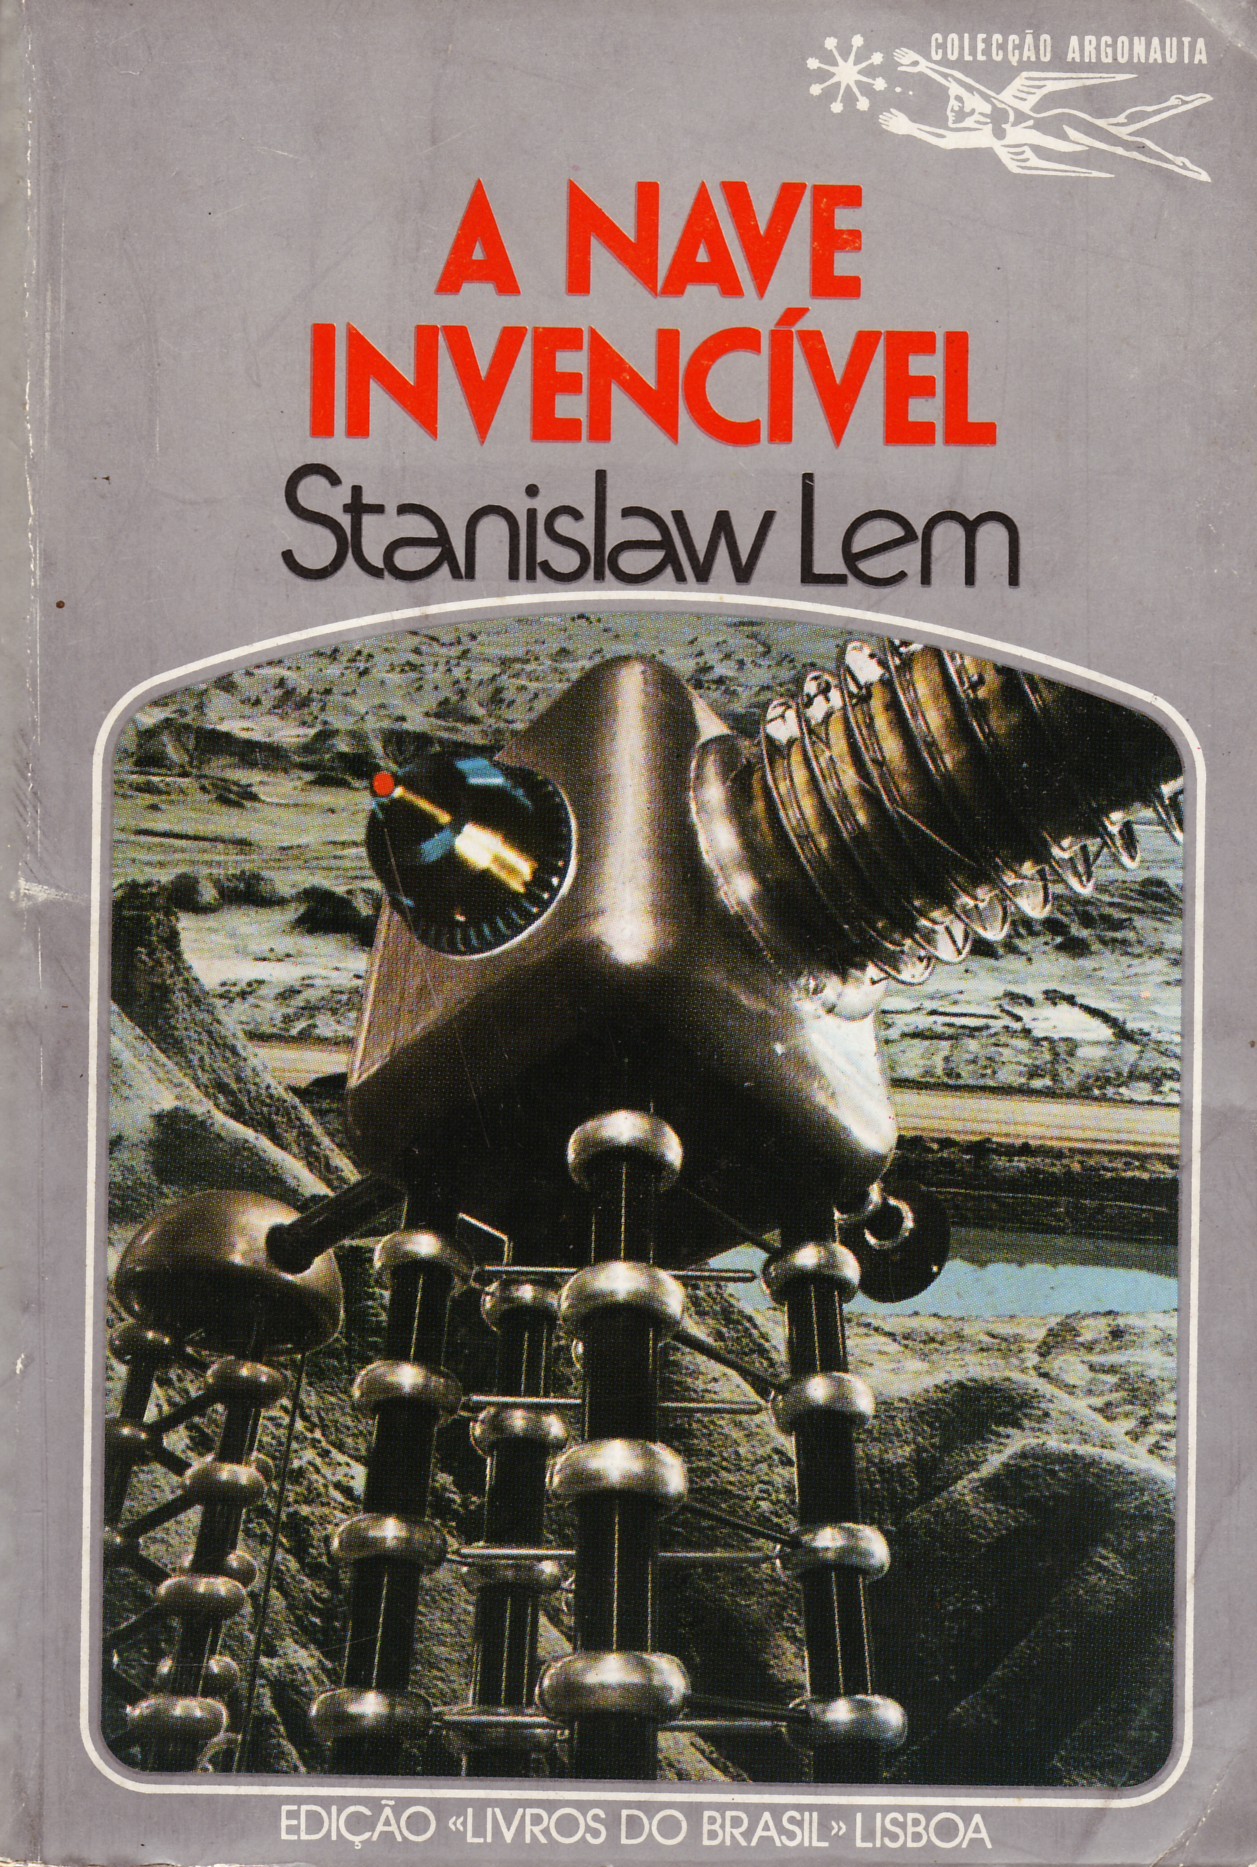 Invincible Portuguese Livros do Brasil 1979.jpg